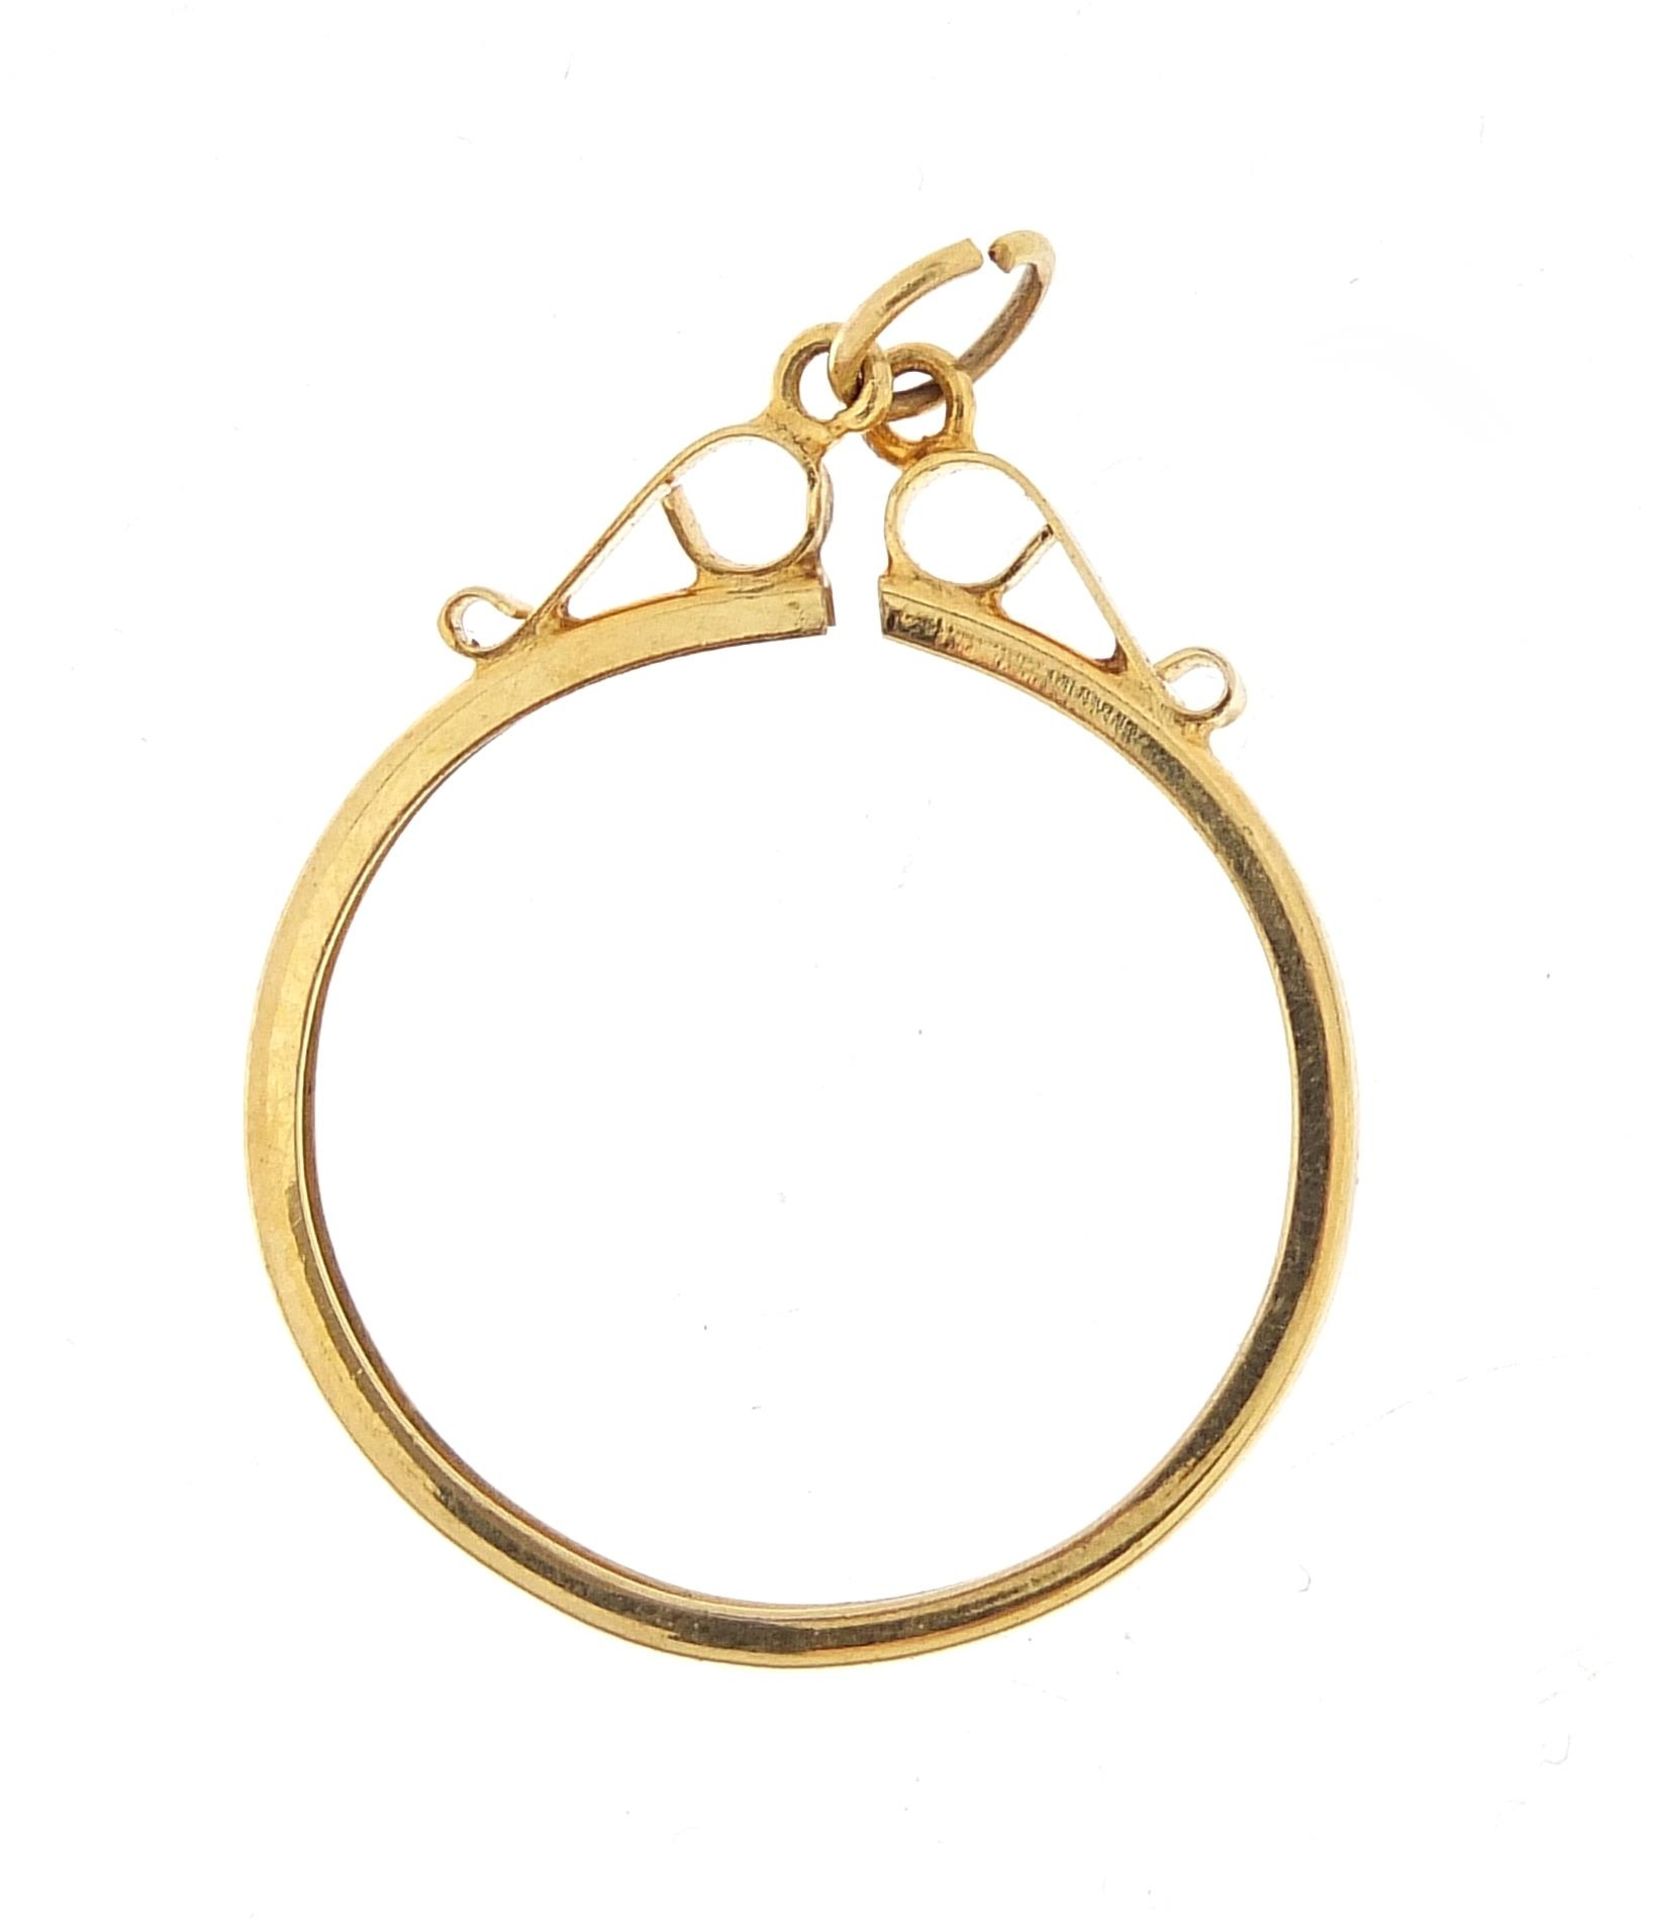 Unmarked gold sovereign pendant mount, 2.8cm in diameter, 1.4g